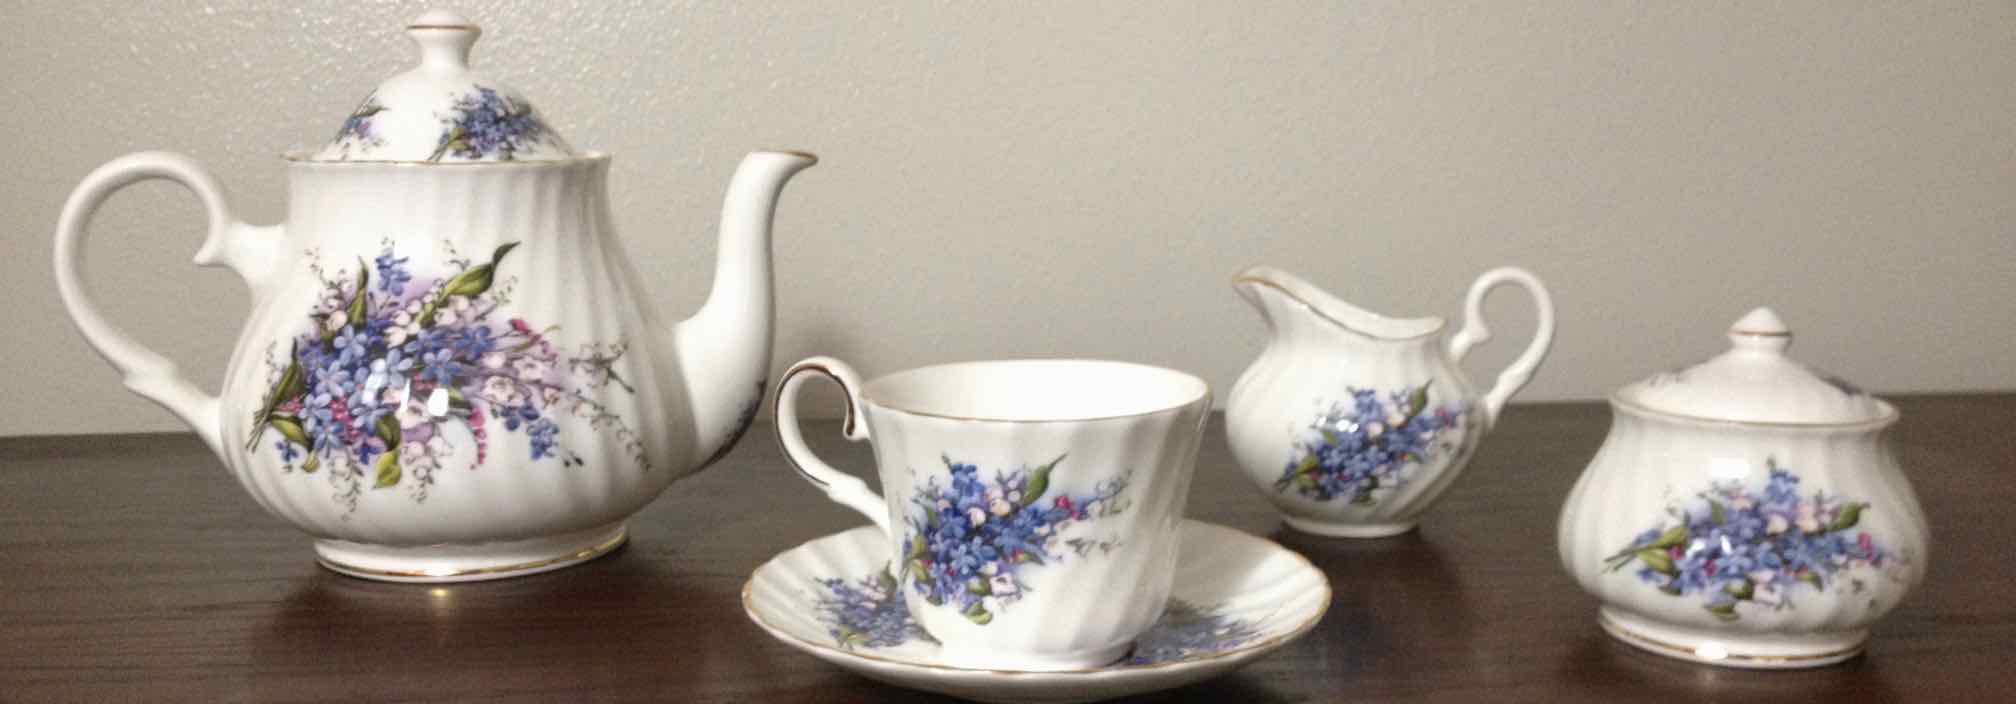 white china tea set with purple flowers